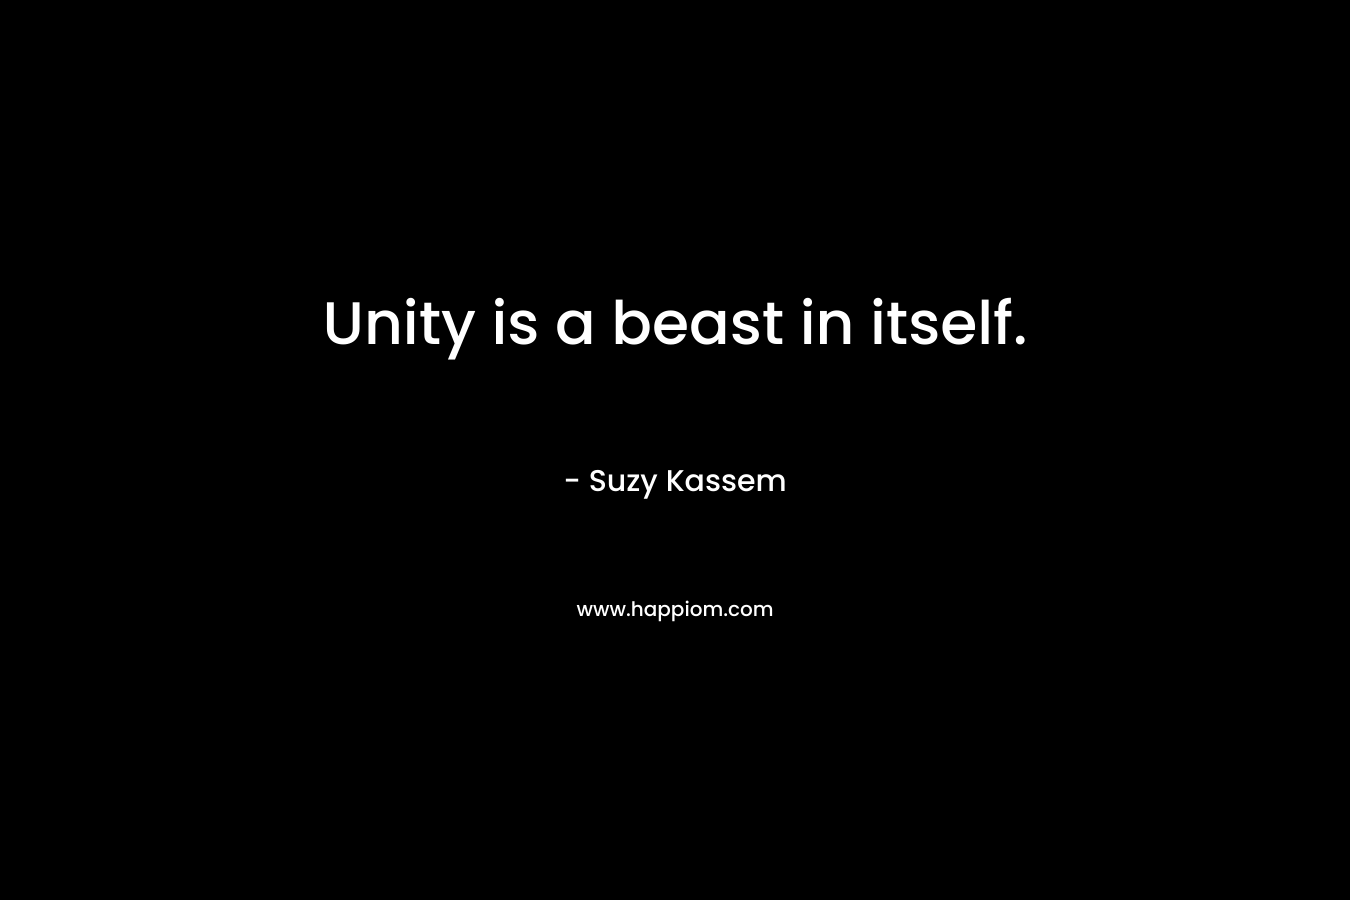 Unity is a beast in itself.